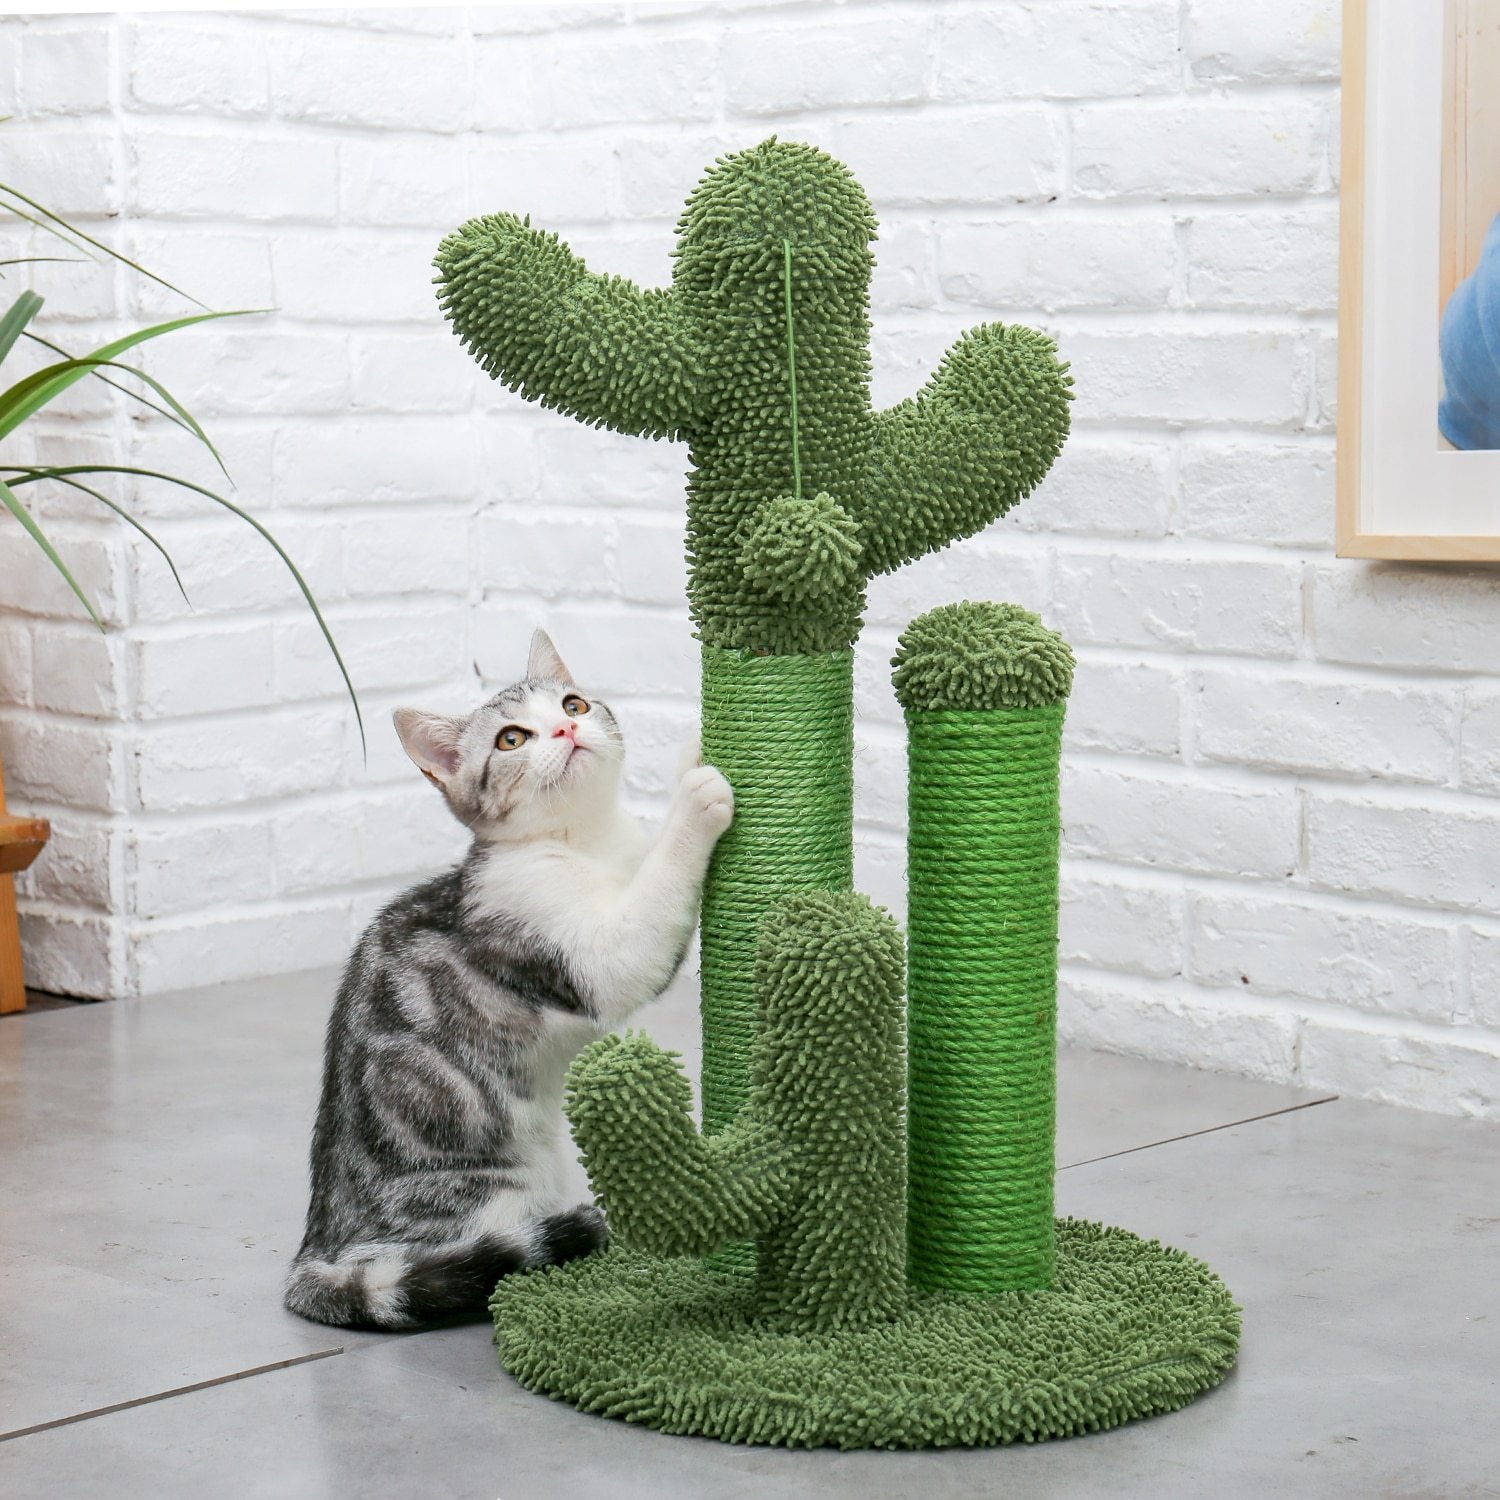 Elegant Cactus Scratcher - Super Kitty Cats - 39439411-amt0066gn-cactus-cat-tree-united-states